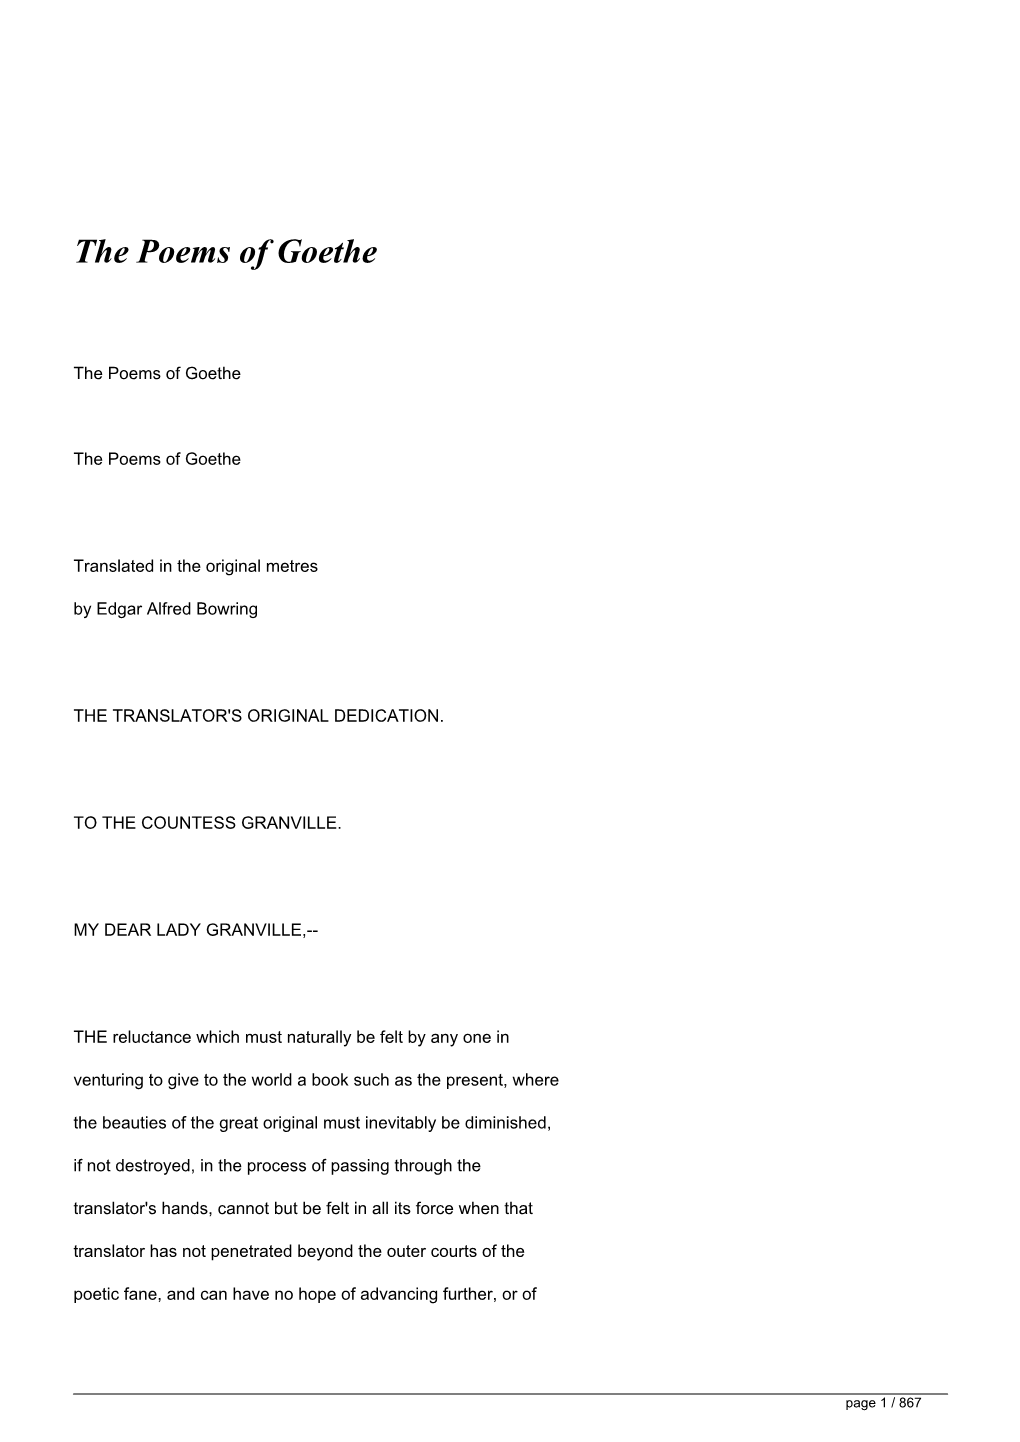 The Poems of Goethe&lt;/H1&gt;